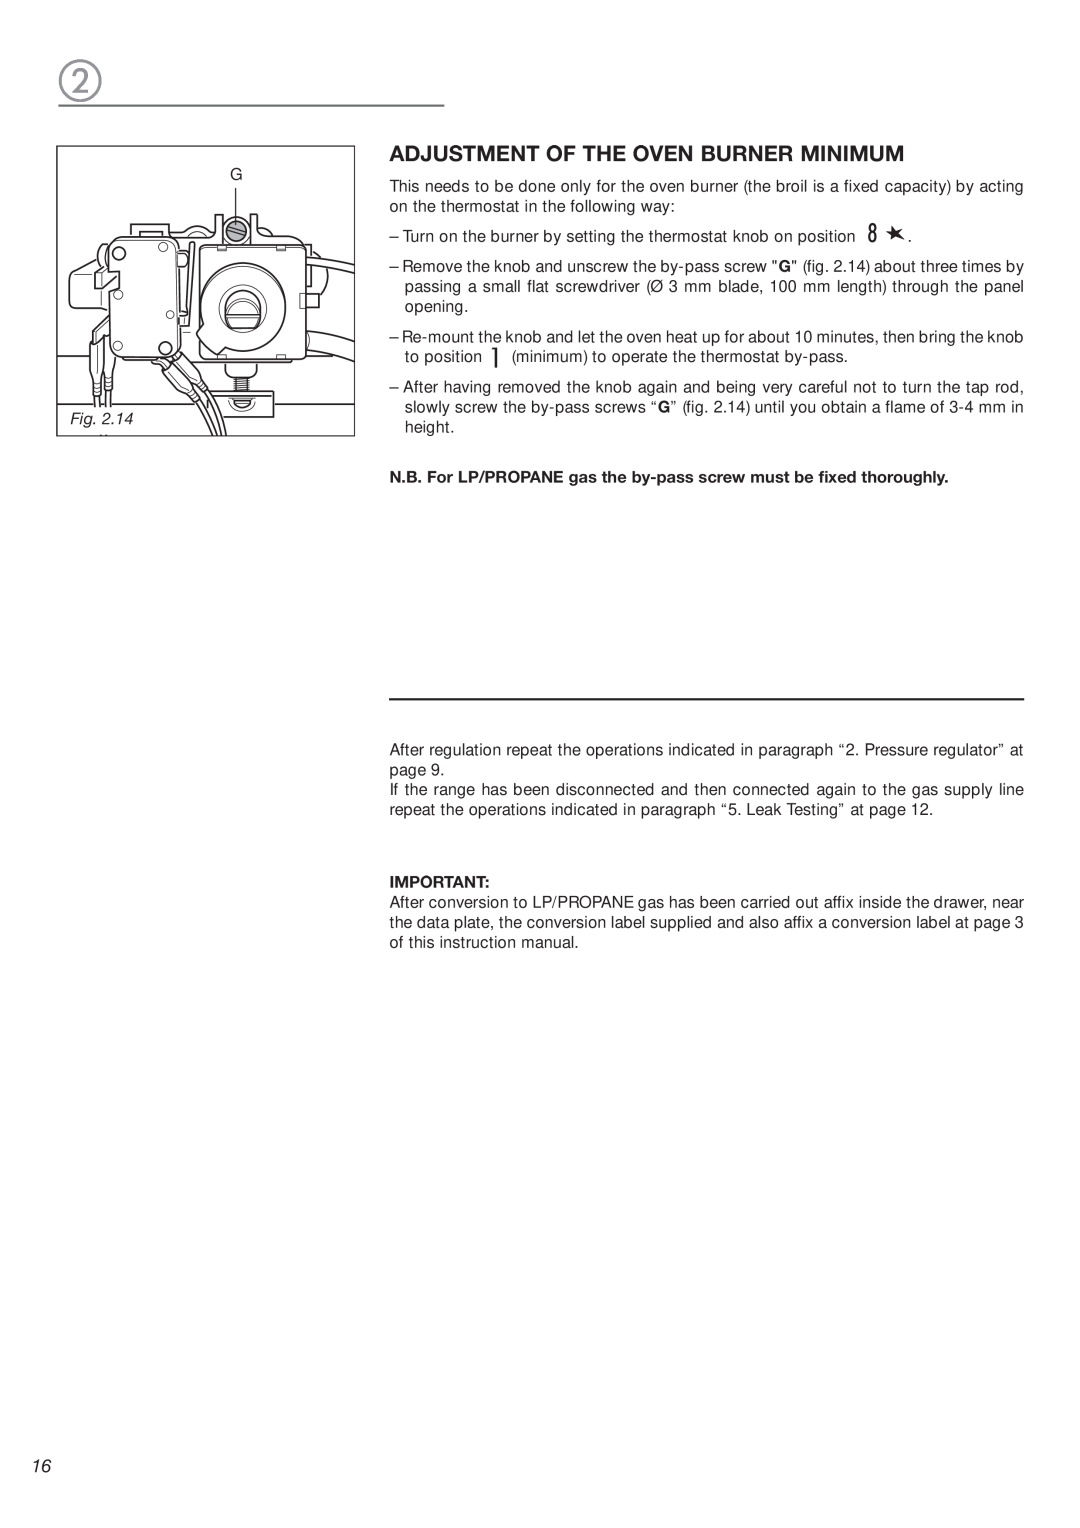 DeLonghi DEFSGG 24 SS installation instructions Adjustment Of The Oven Burner Minimum 